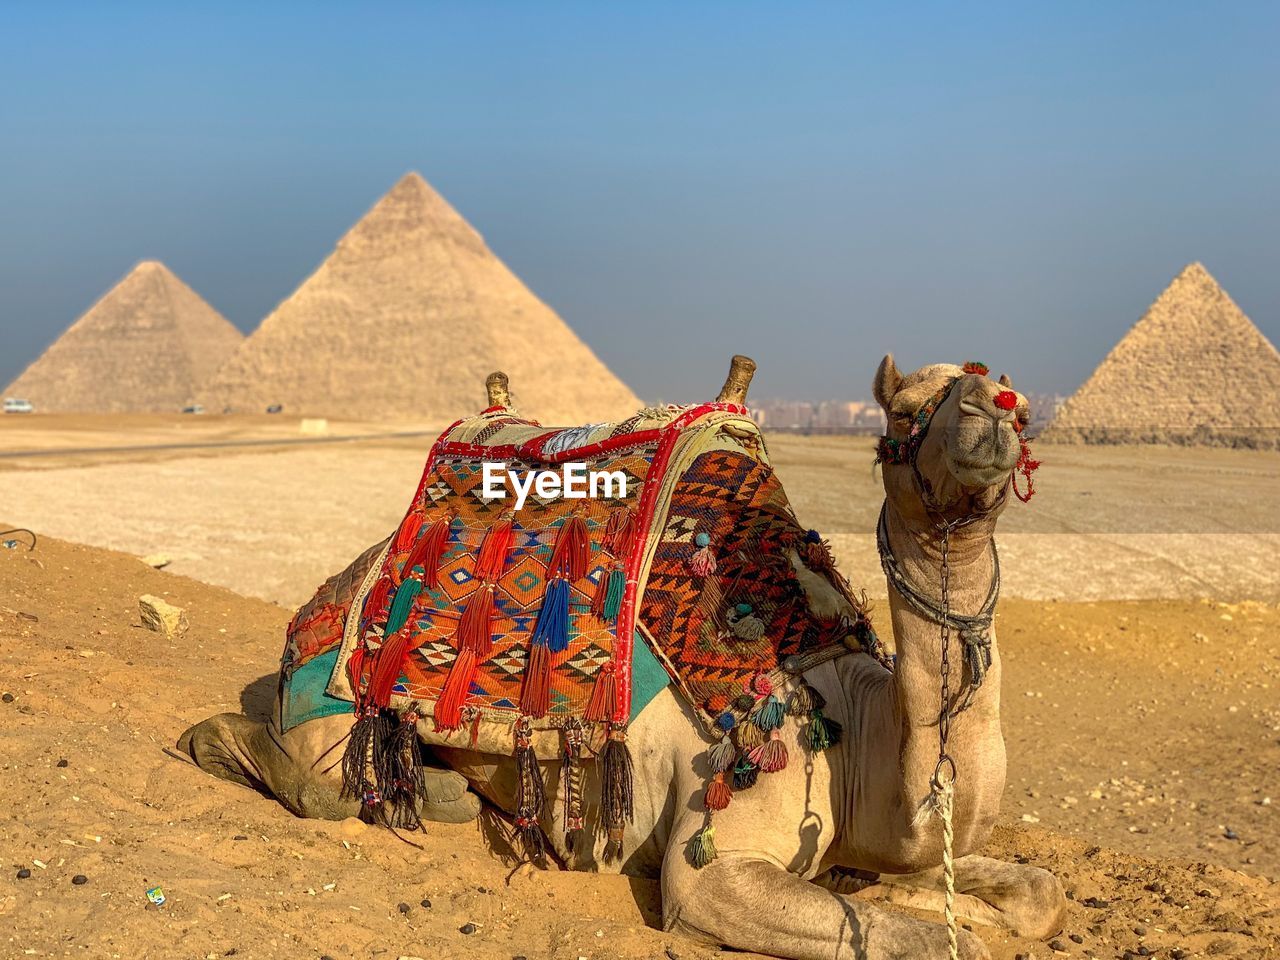 View of camel in desert